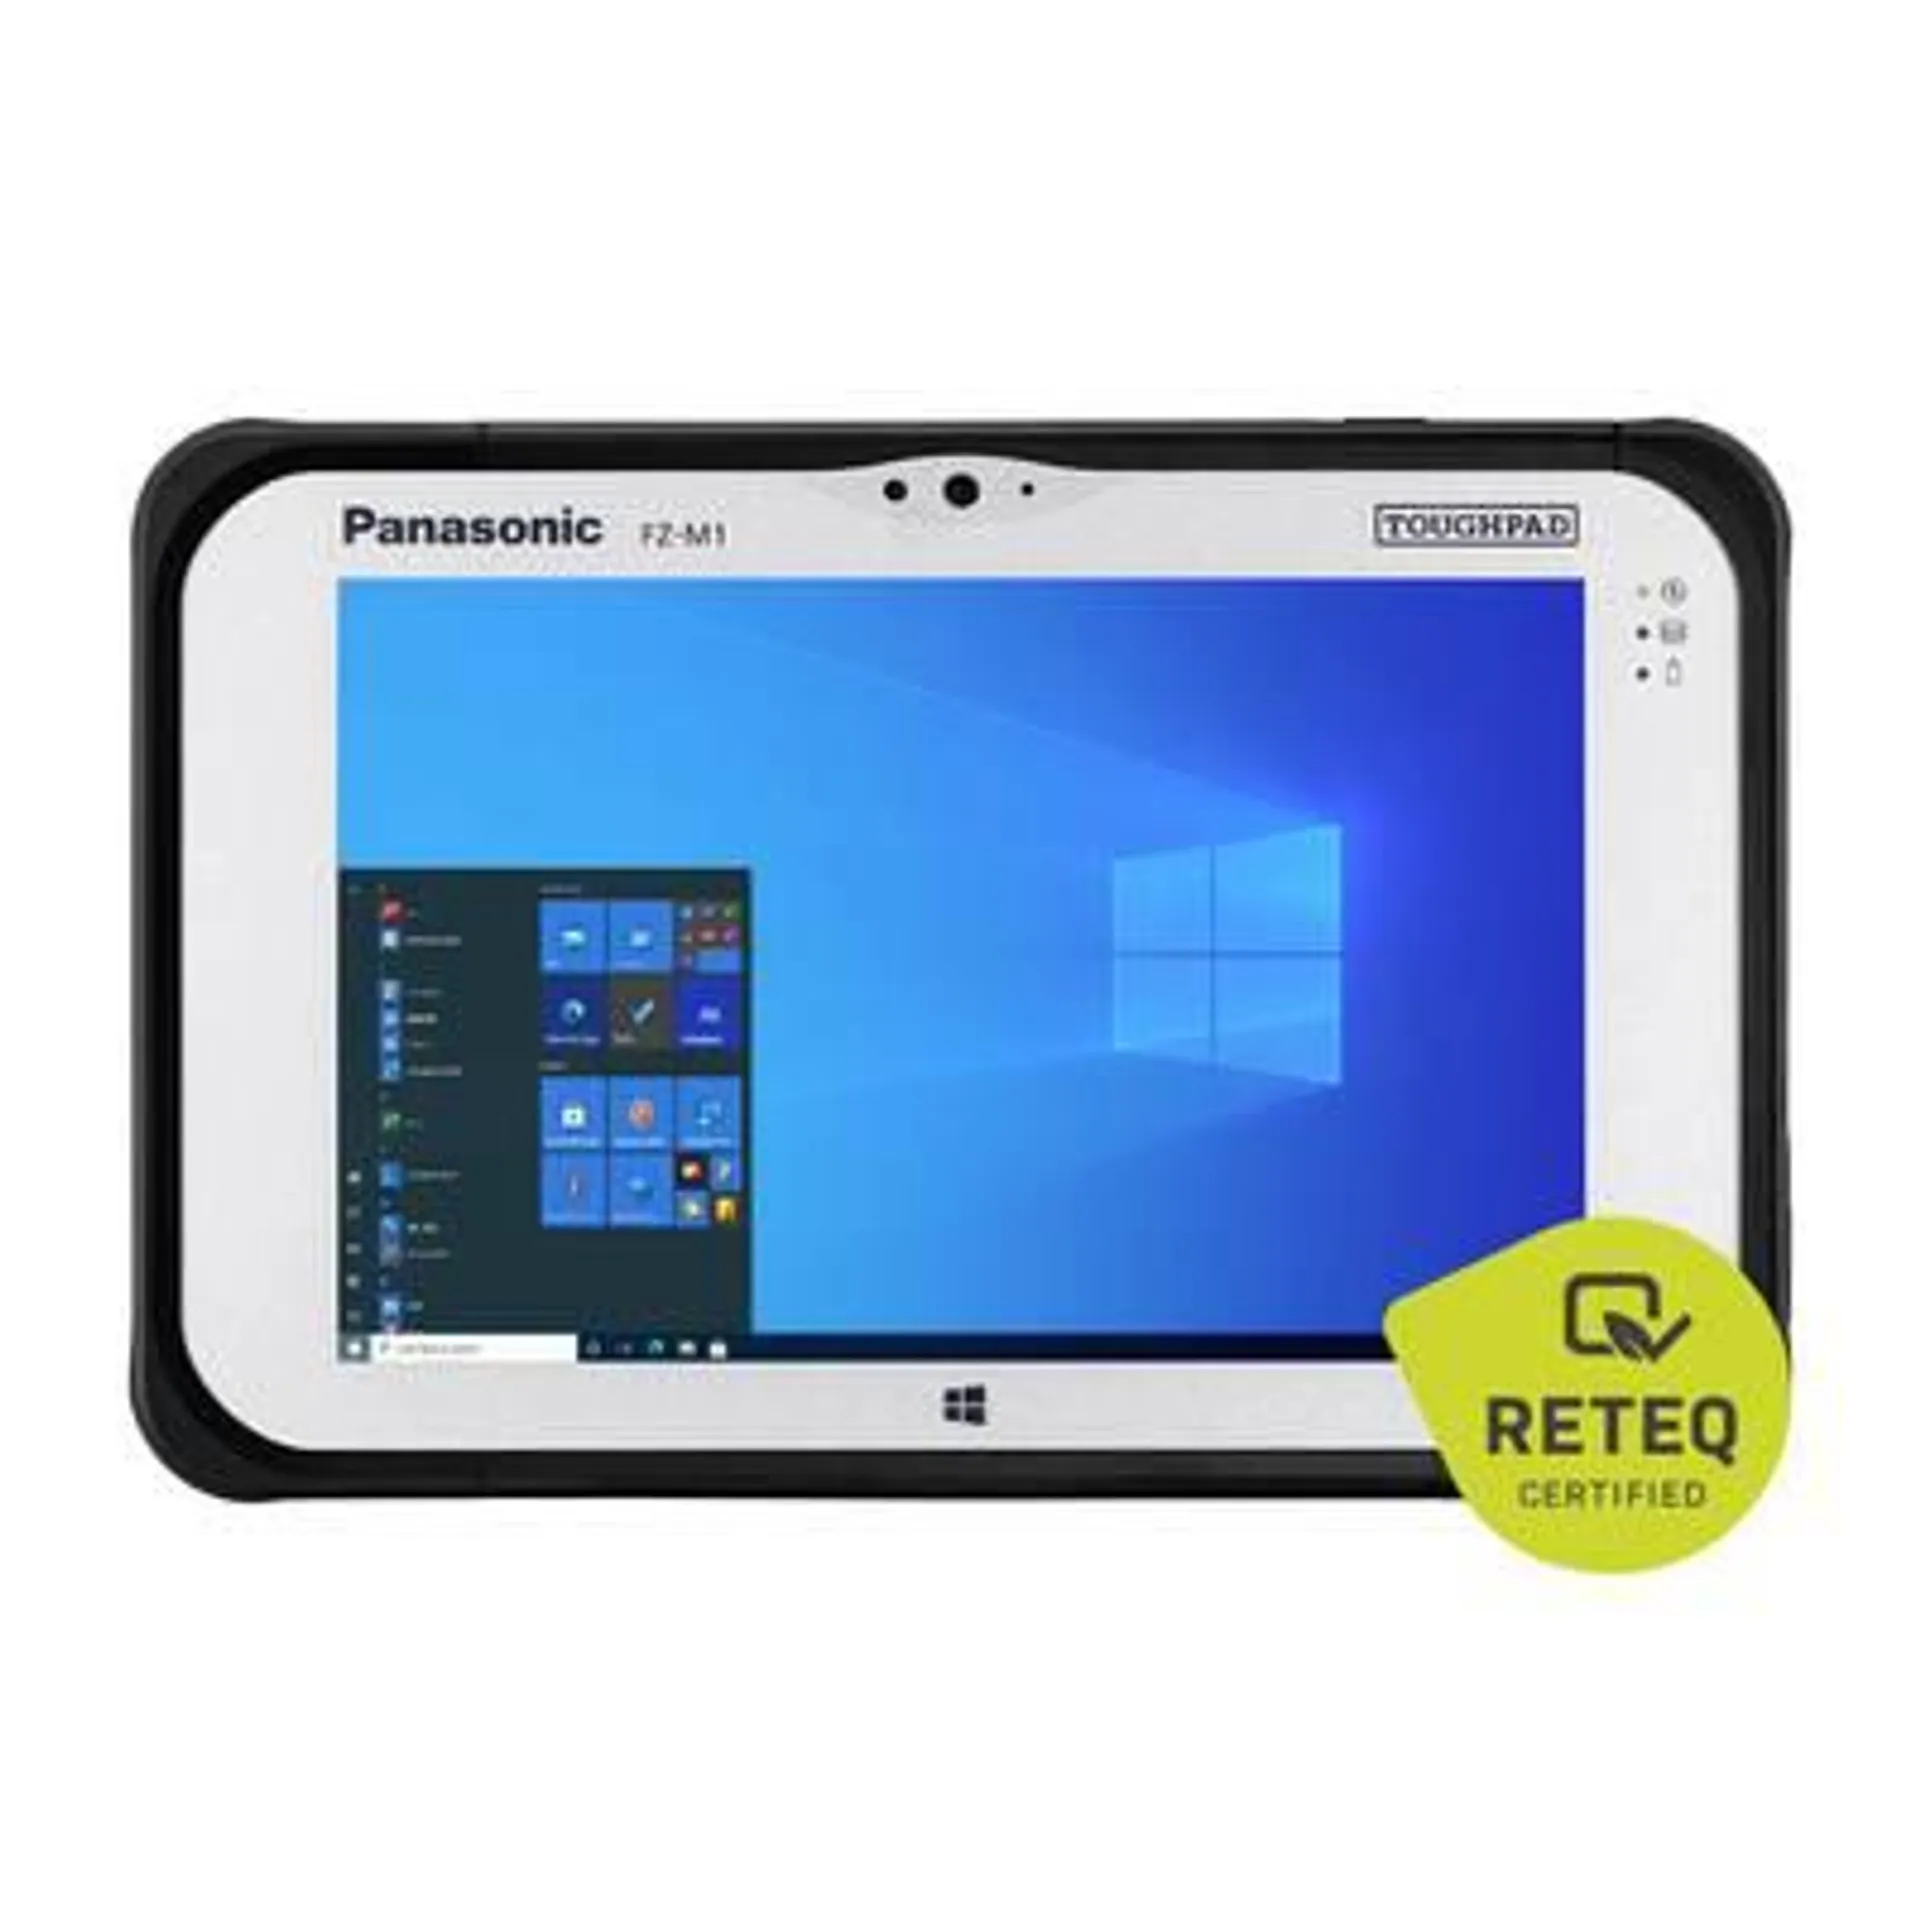 Panasonic Toughpad FZ-M1 MK3 Windows®-Tablet Refurbished (sehr gut) 17.8 cm (7 Zoll) 256 WiFi Silber 1.2 GHz